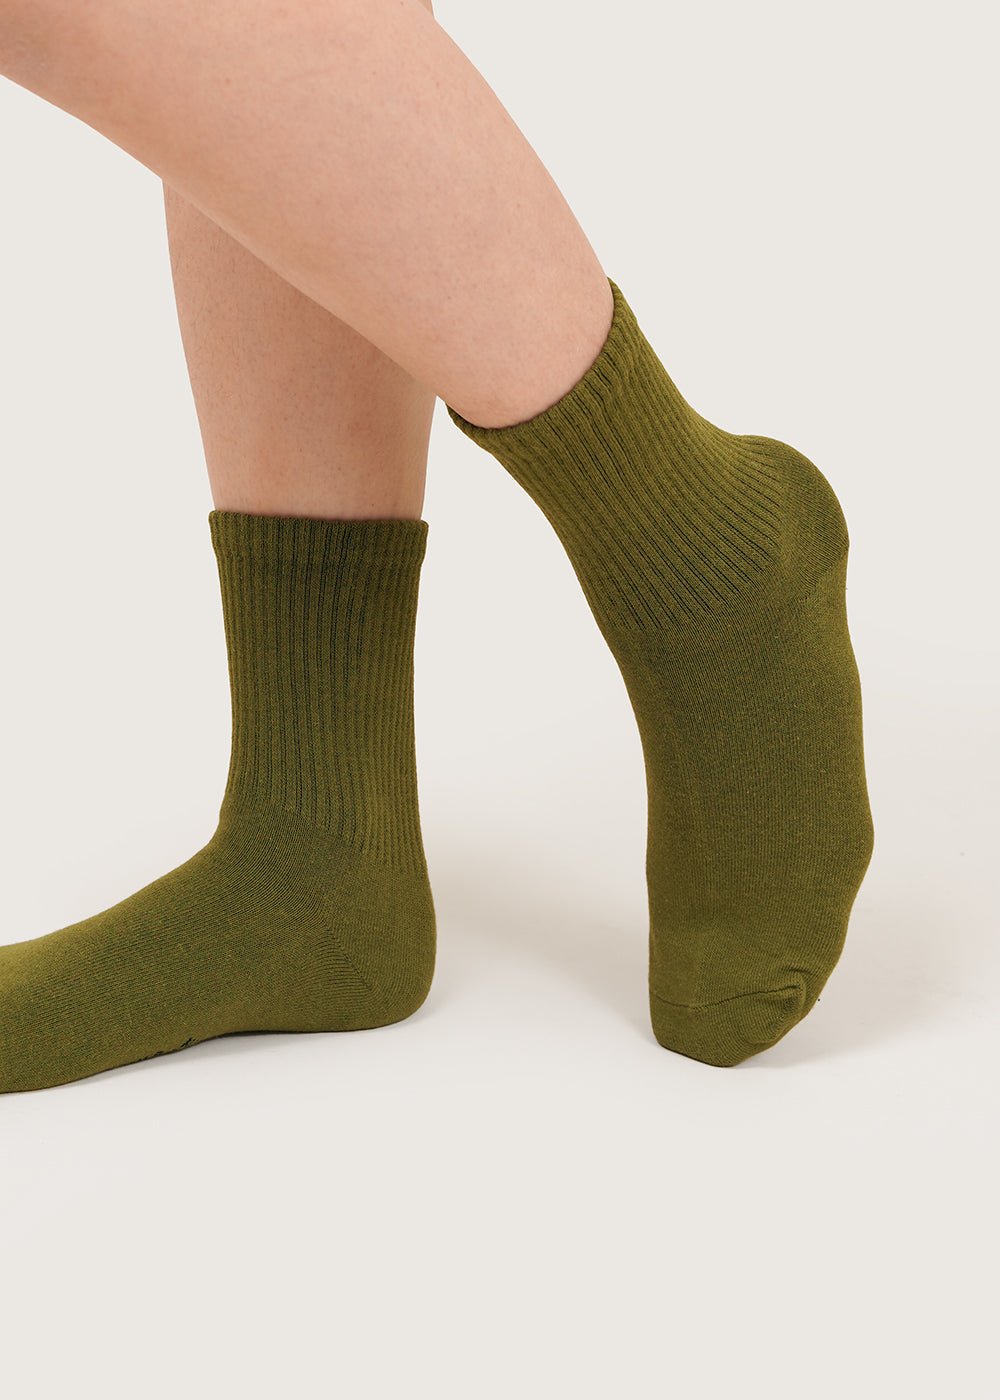 NIA THOMAS Verde Organic Cotton Socks - New Classics Studios Sustainable Ethical Fashion Canada